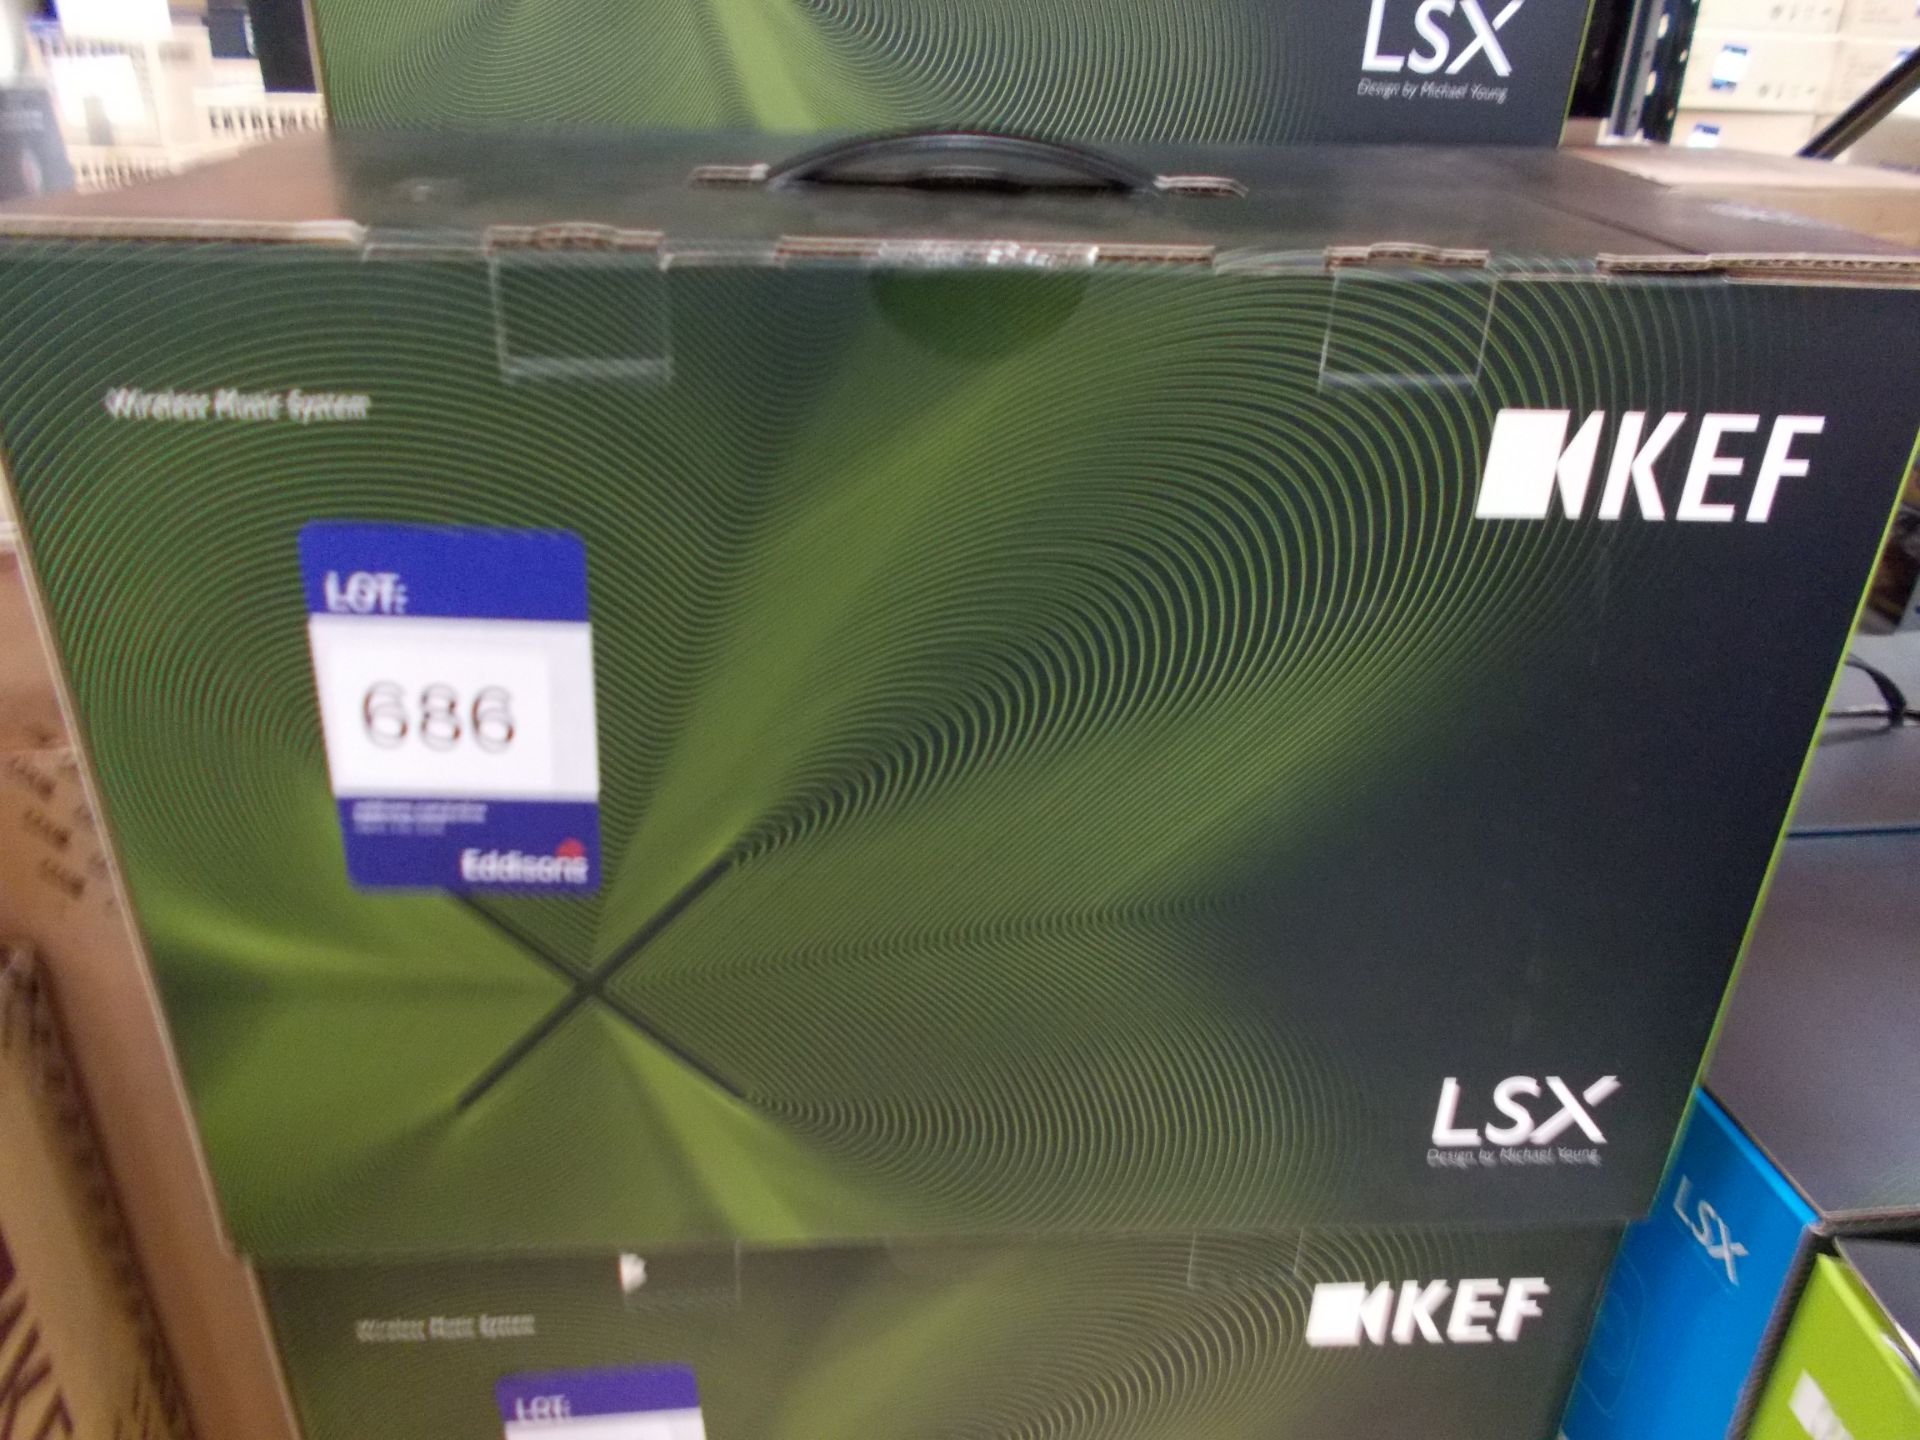 Pair of Kef LSX Blue Wireless Speakers (boxed) – RRP £1000